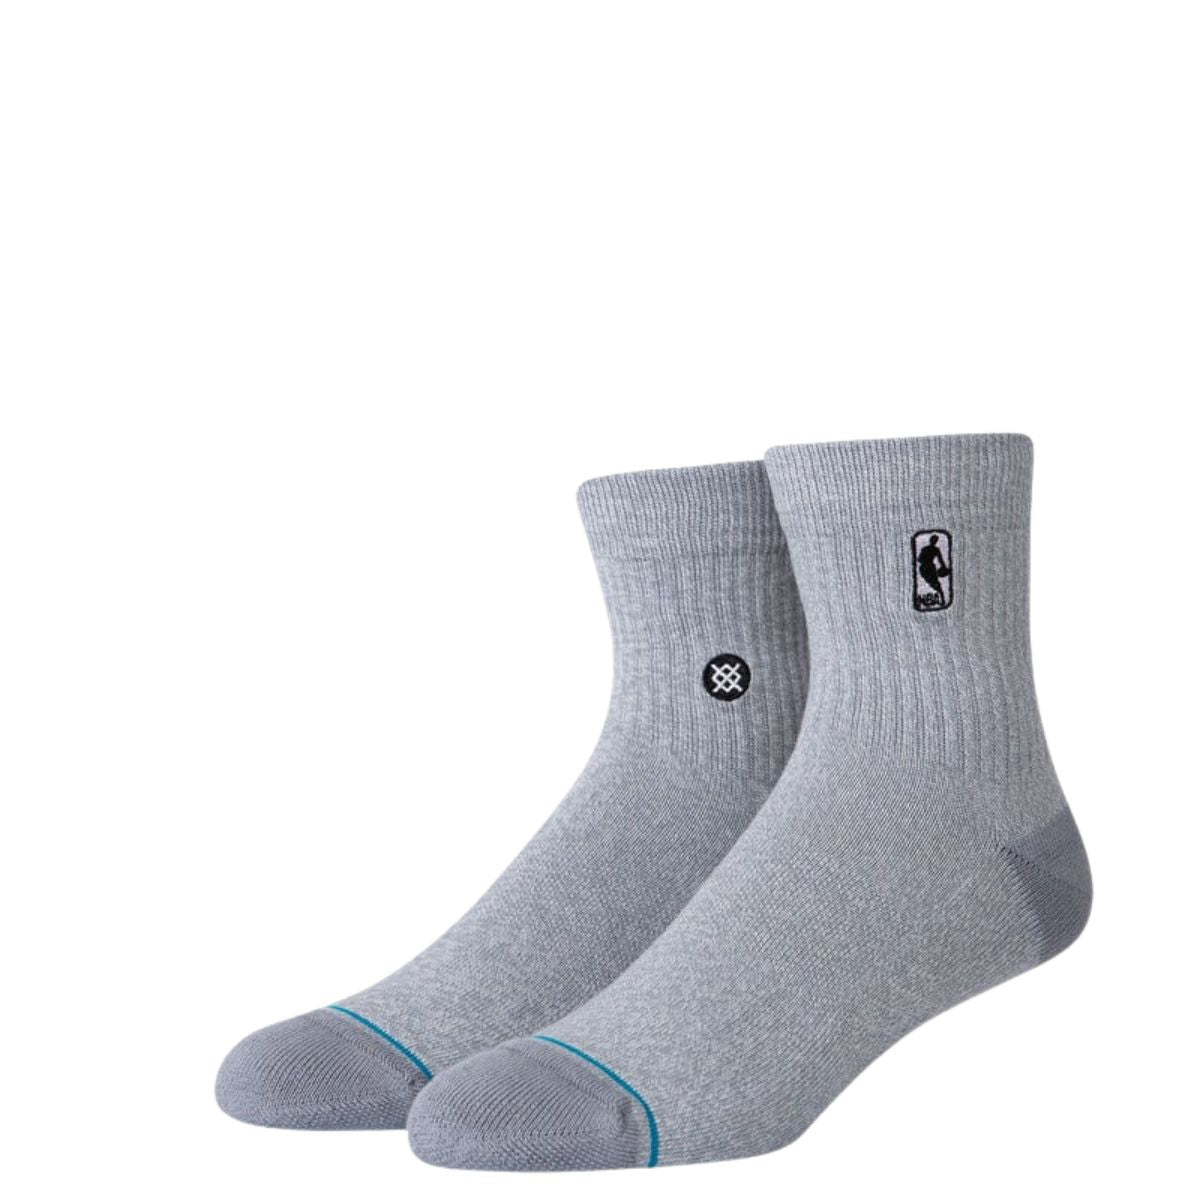 Stance NBA Logoman QTR Socks in Heather Grey - BoardCo